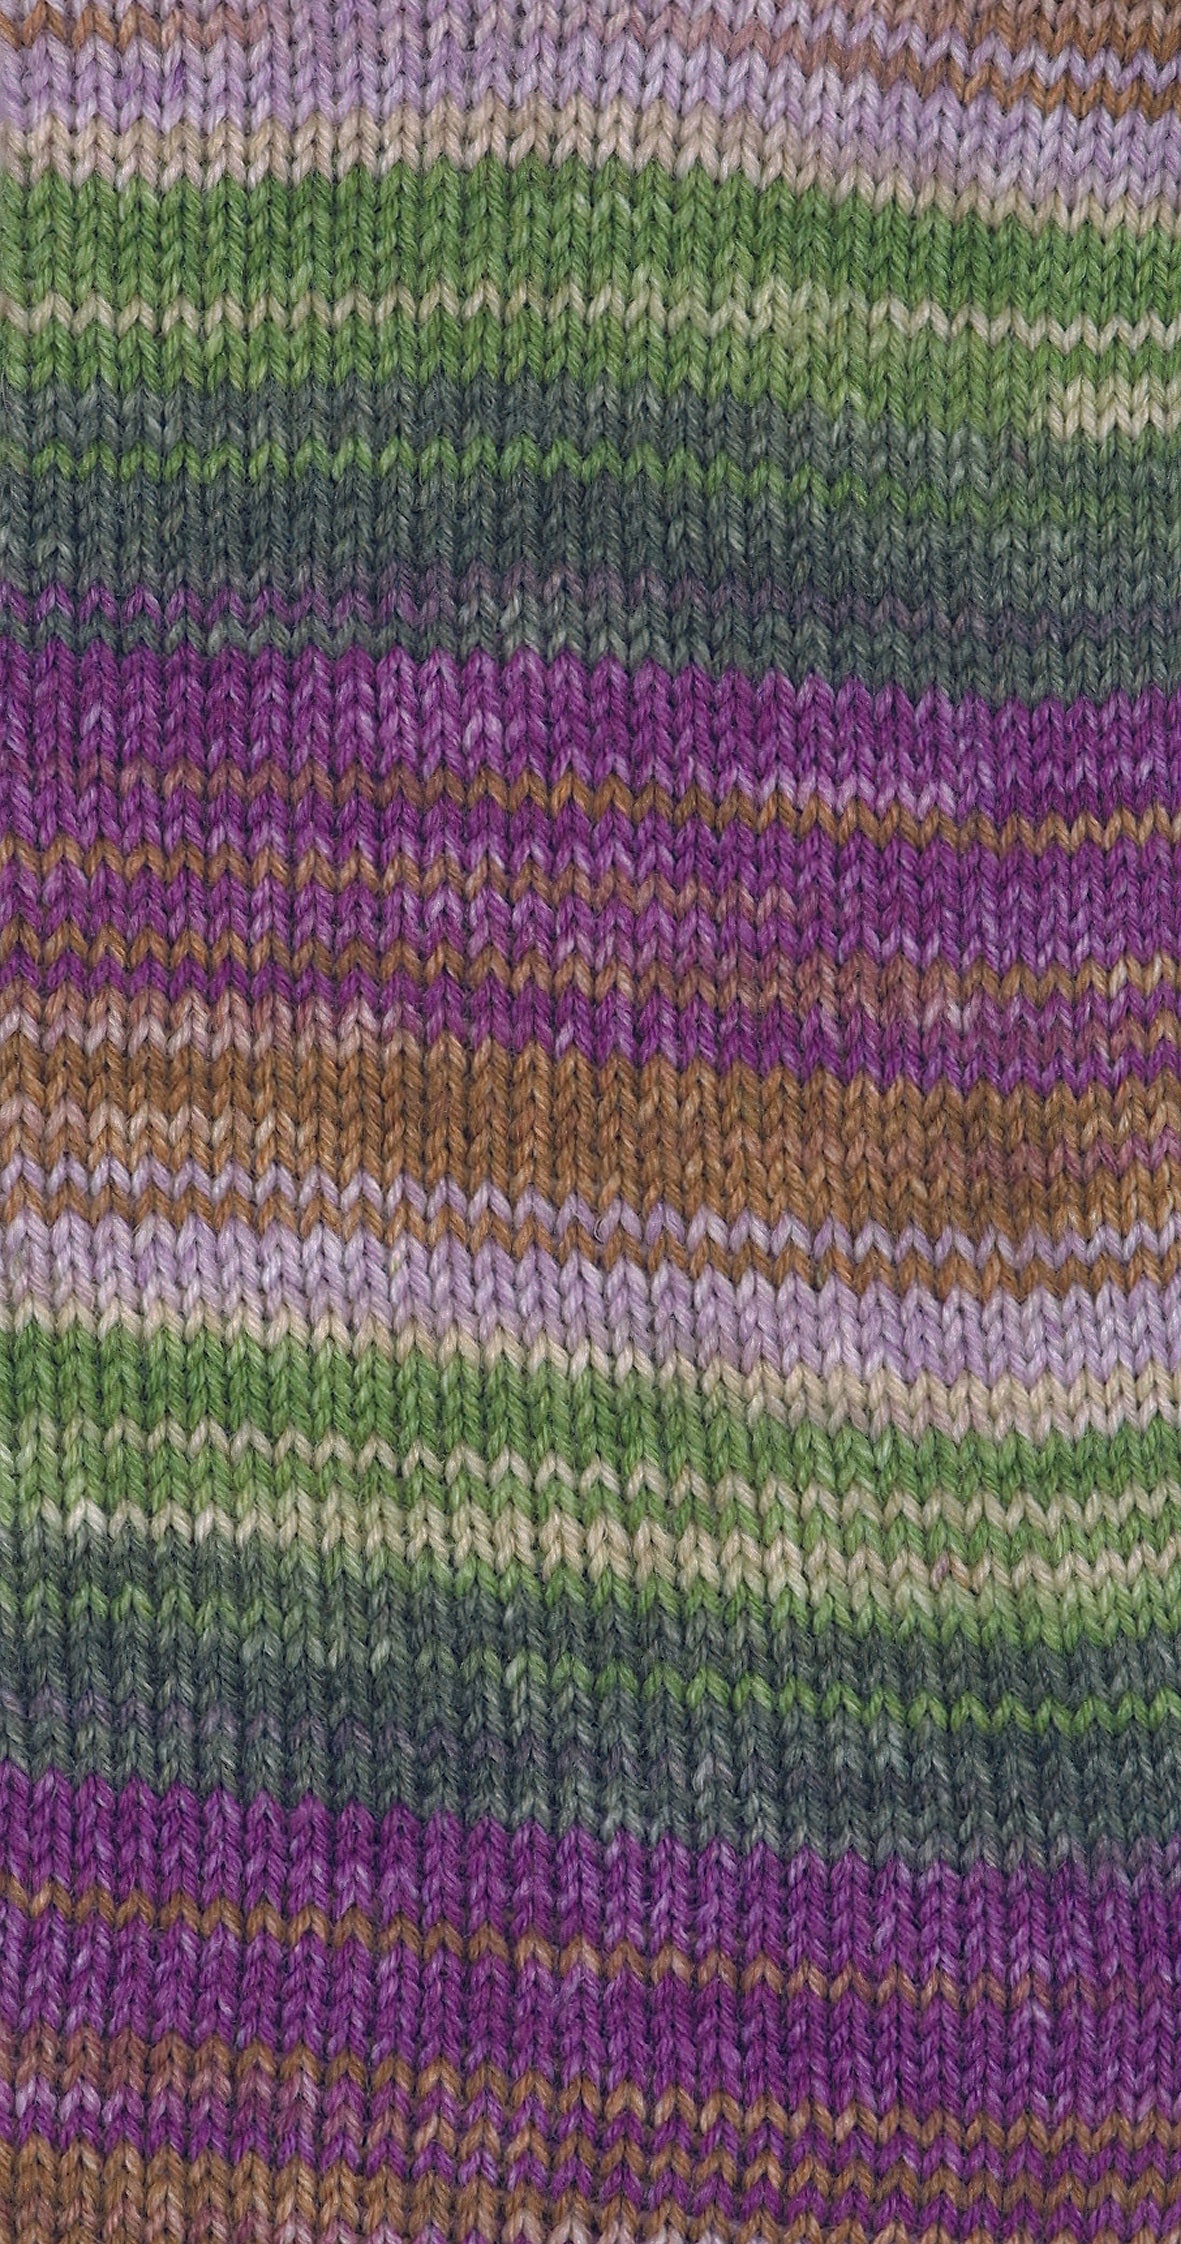 Schoeller-Austermann Step6, Irish Rainbow, 150g, 97826, Farbe kilkeel 630